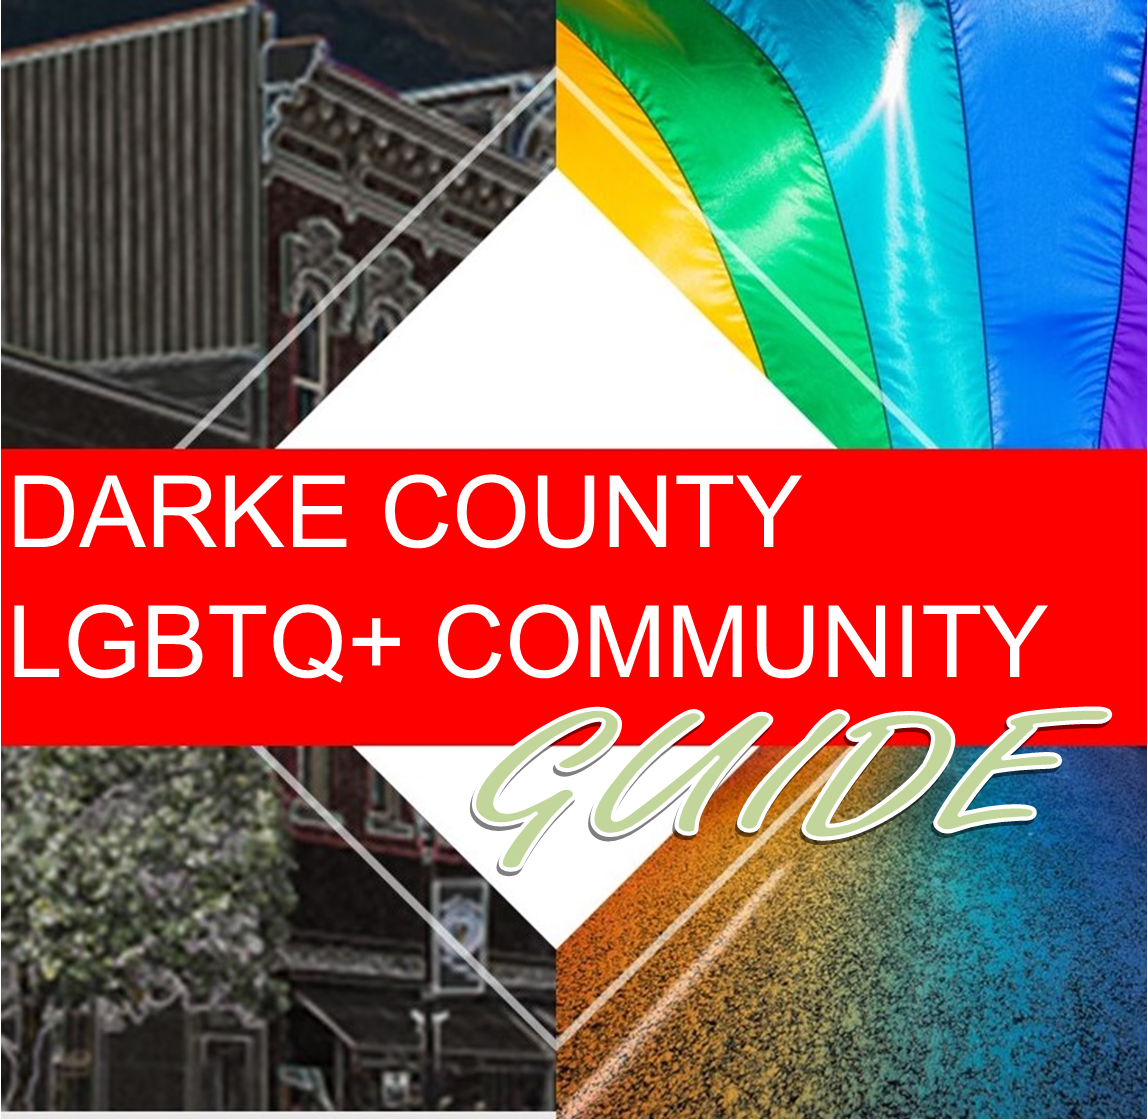 Darke County LGBTQ+ Community Guide